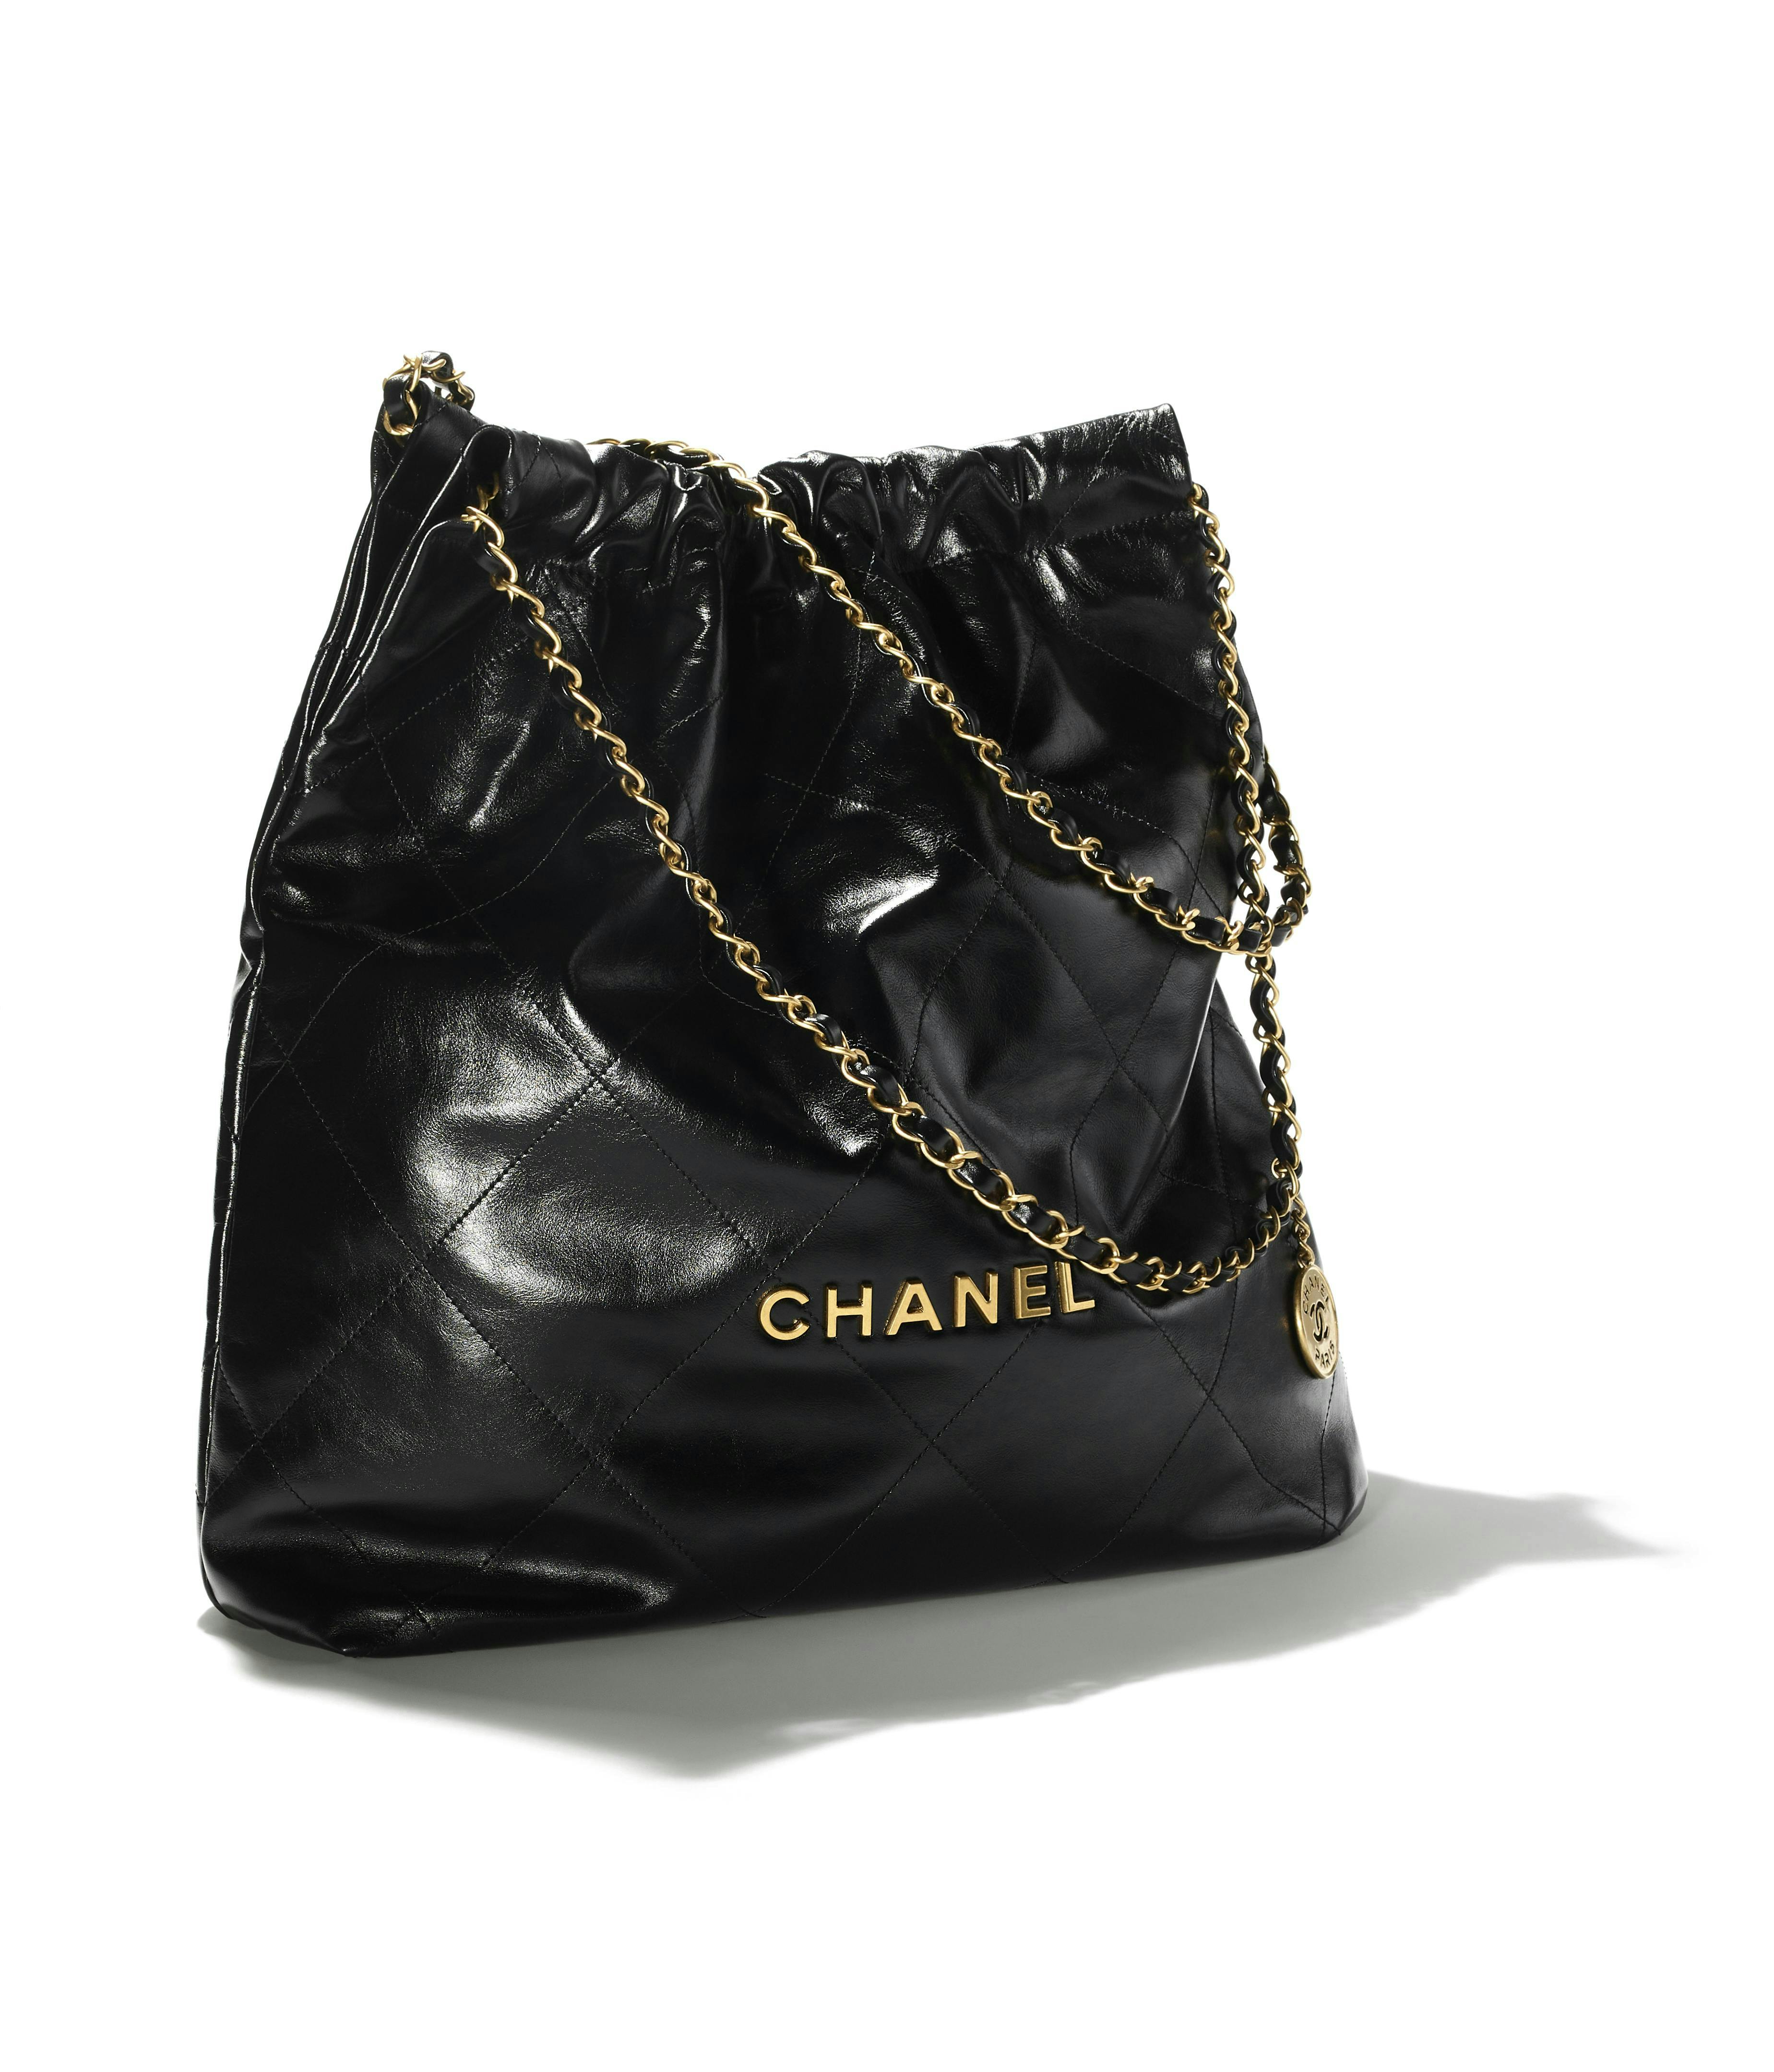 Chanel Presents Chic Chanel 22 Bag by Virginie Viard - Chanel 22